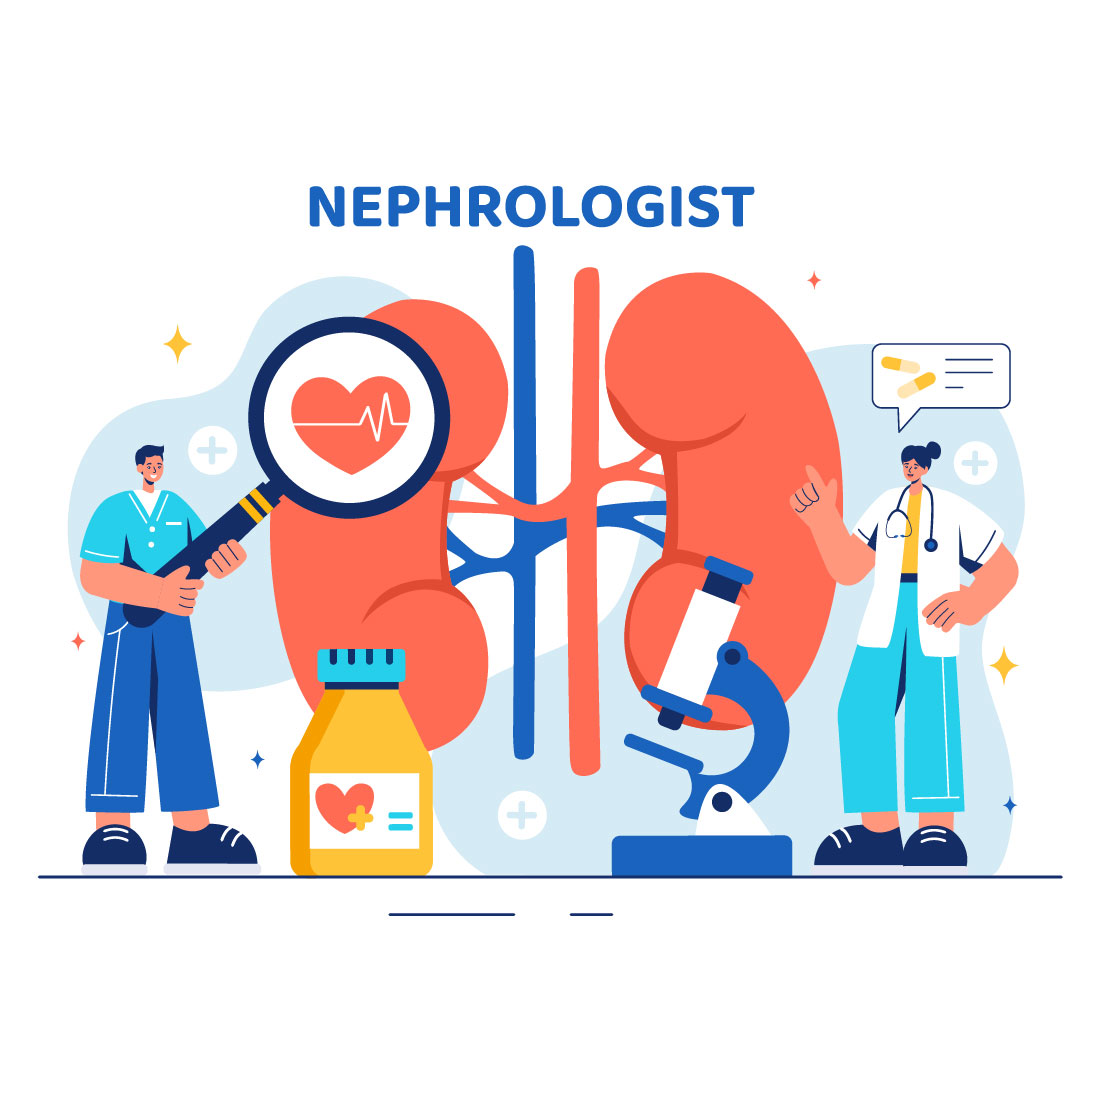 9 Nephrologist Vector Illustration cover image.